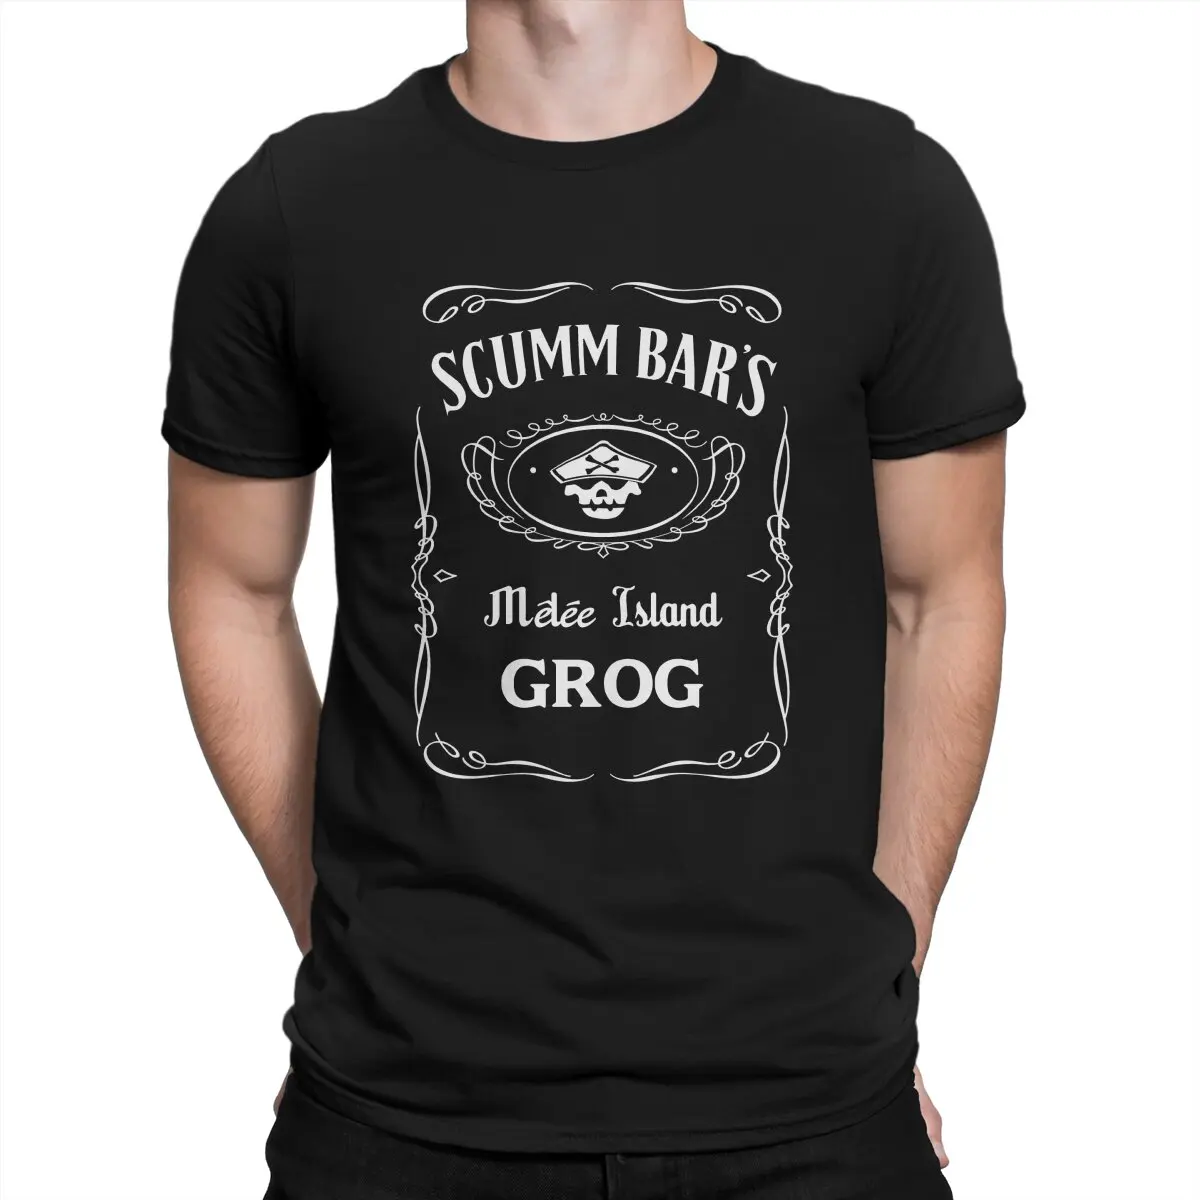 

Scumm Bar's GROG Special TShirt Monkey Island Game LeChuck Elaine Guybrush Casual T Shirt Hot Sale Stuff For Men Women